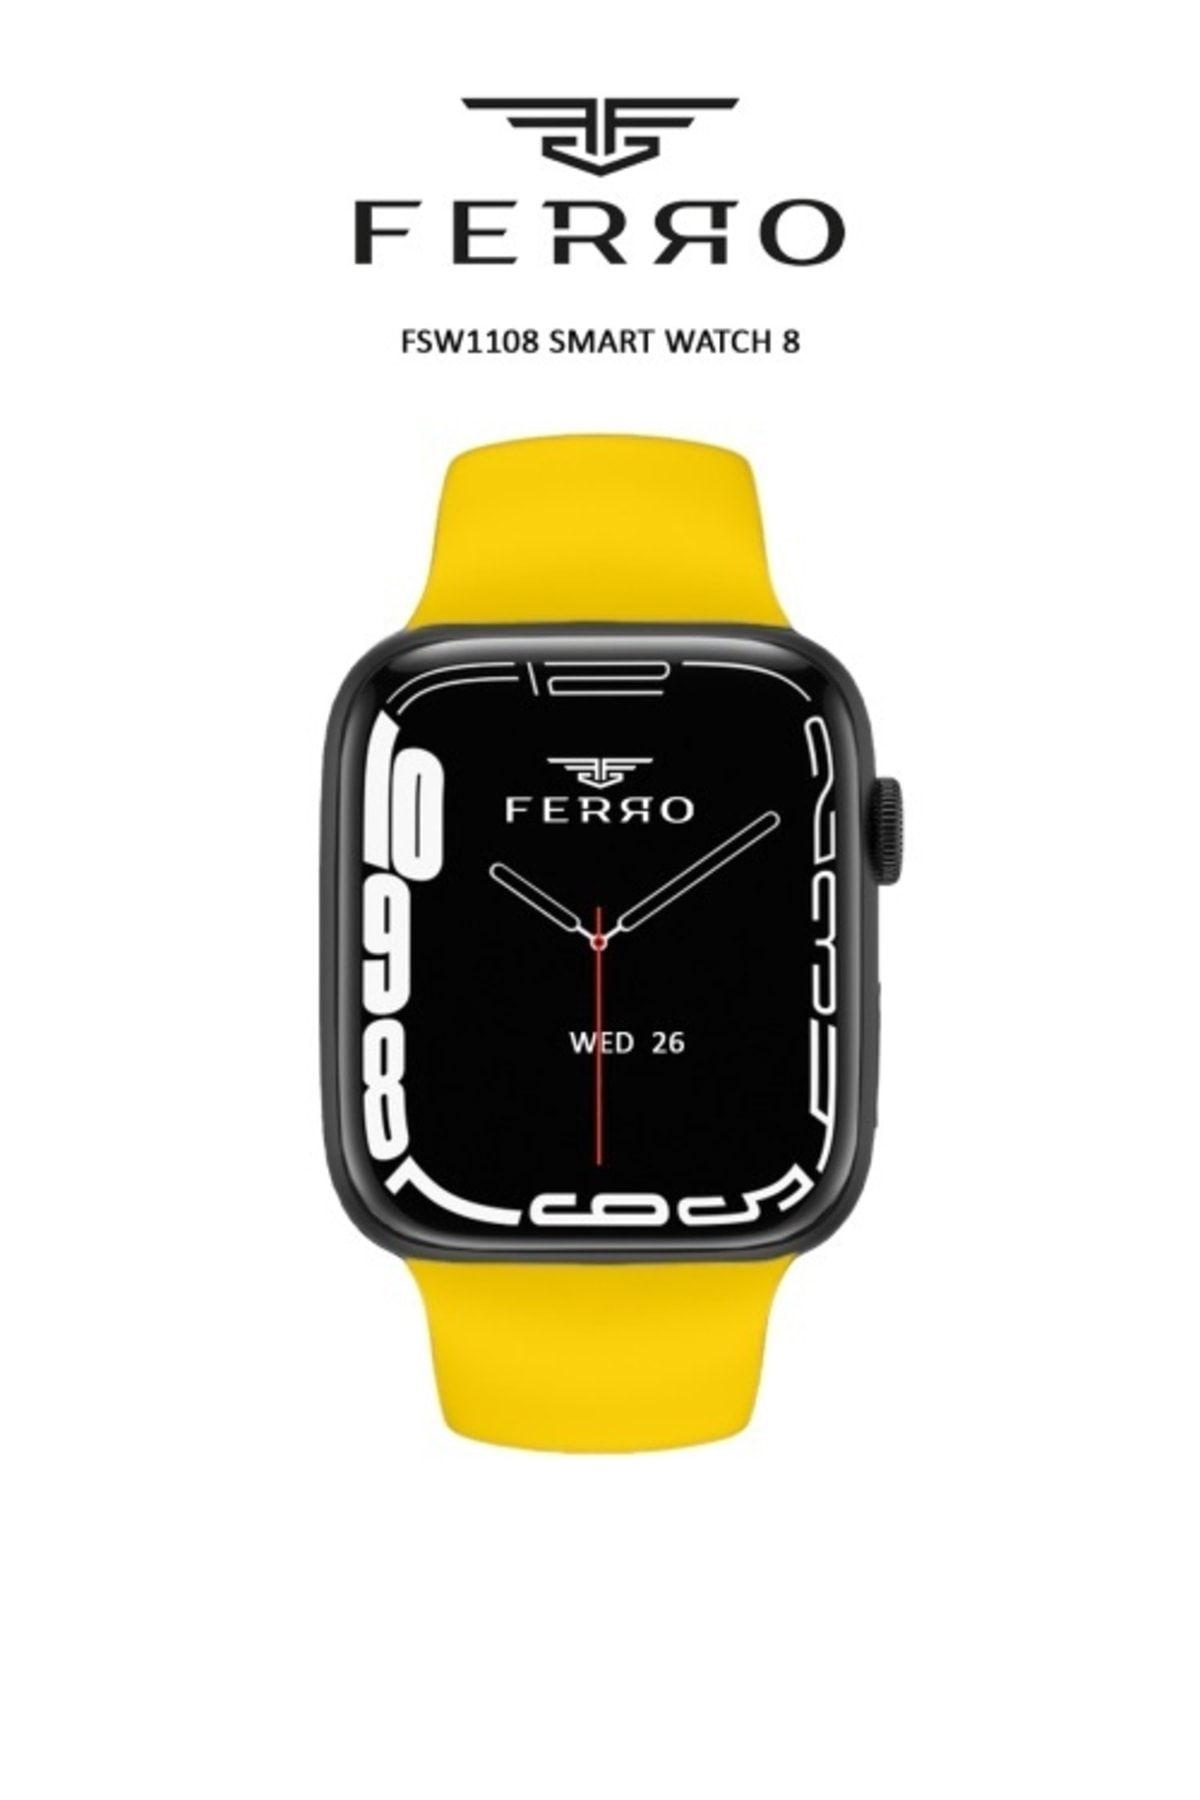 FERRO Watch 8 Fsw1108-gs Android Ve Ios Uyumlu Akıllı Saat